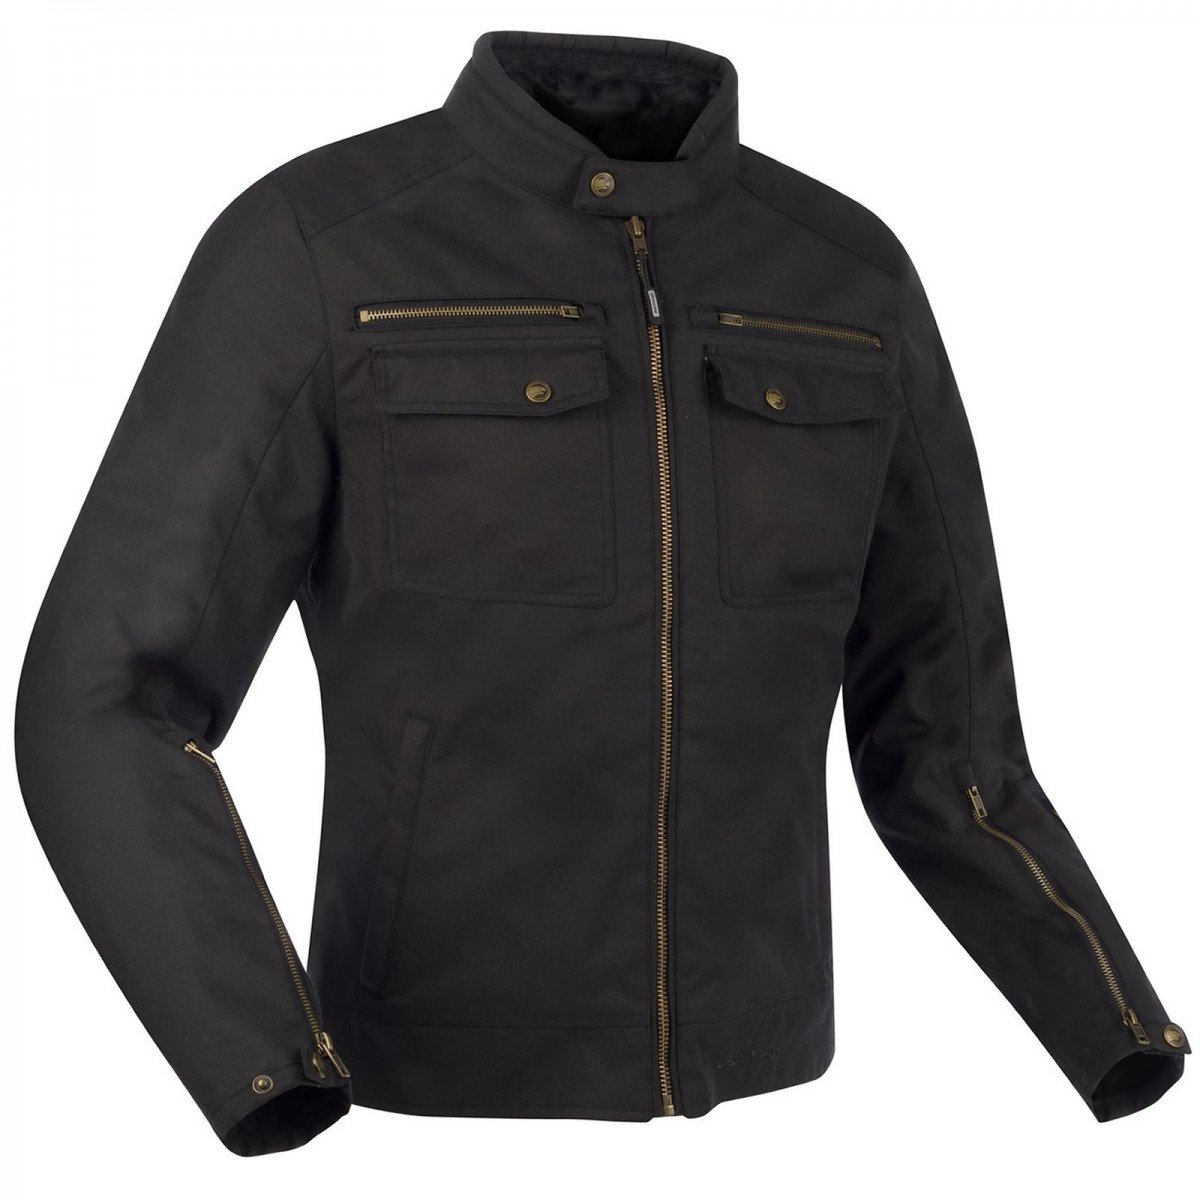 Image of Bering Winton Jacket Black Size L ID 3660815161920